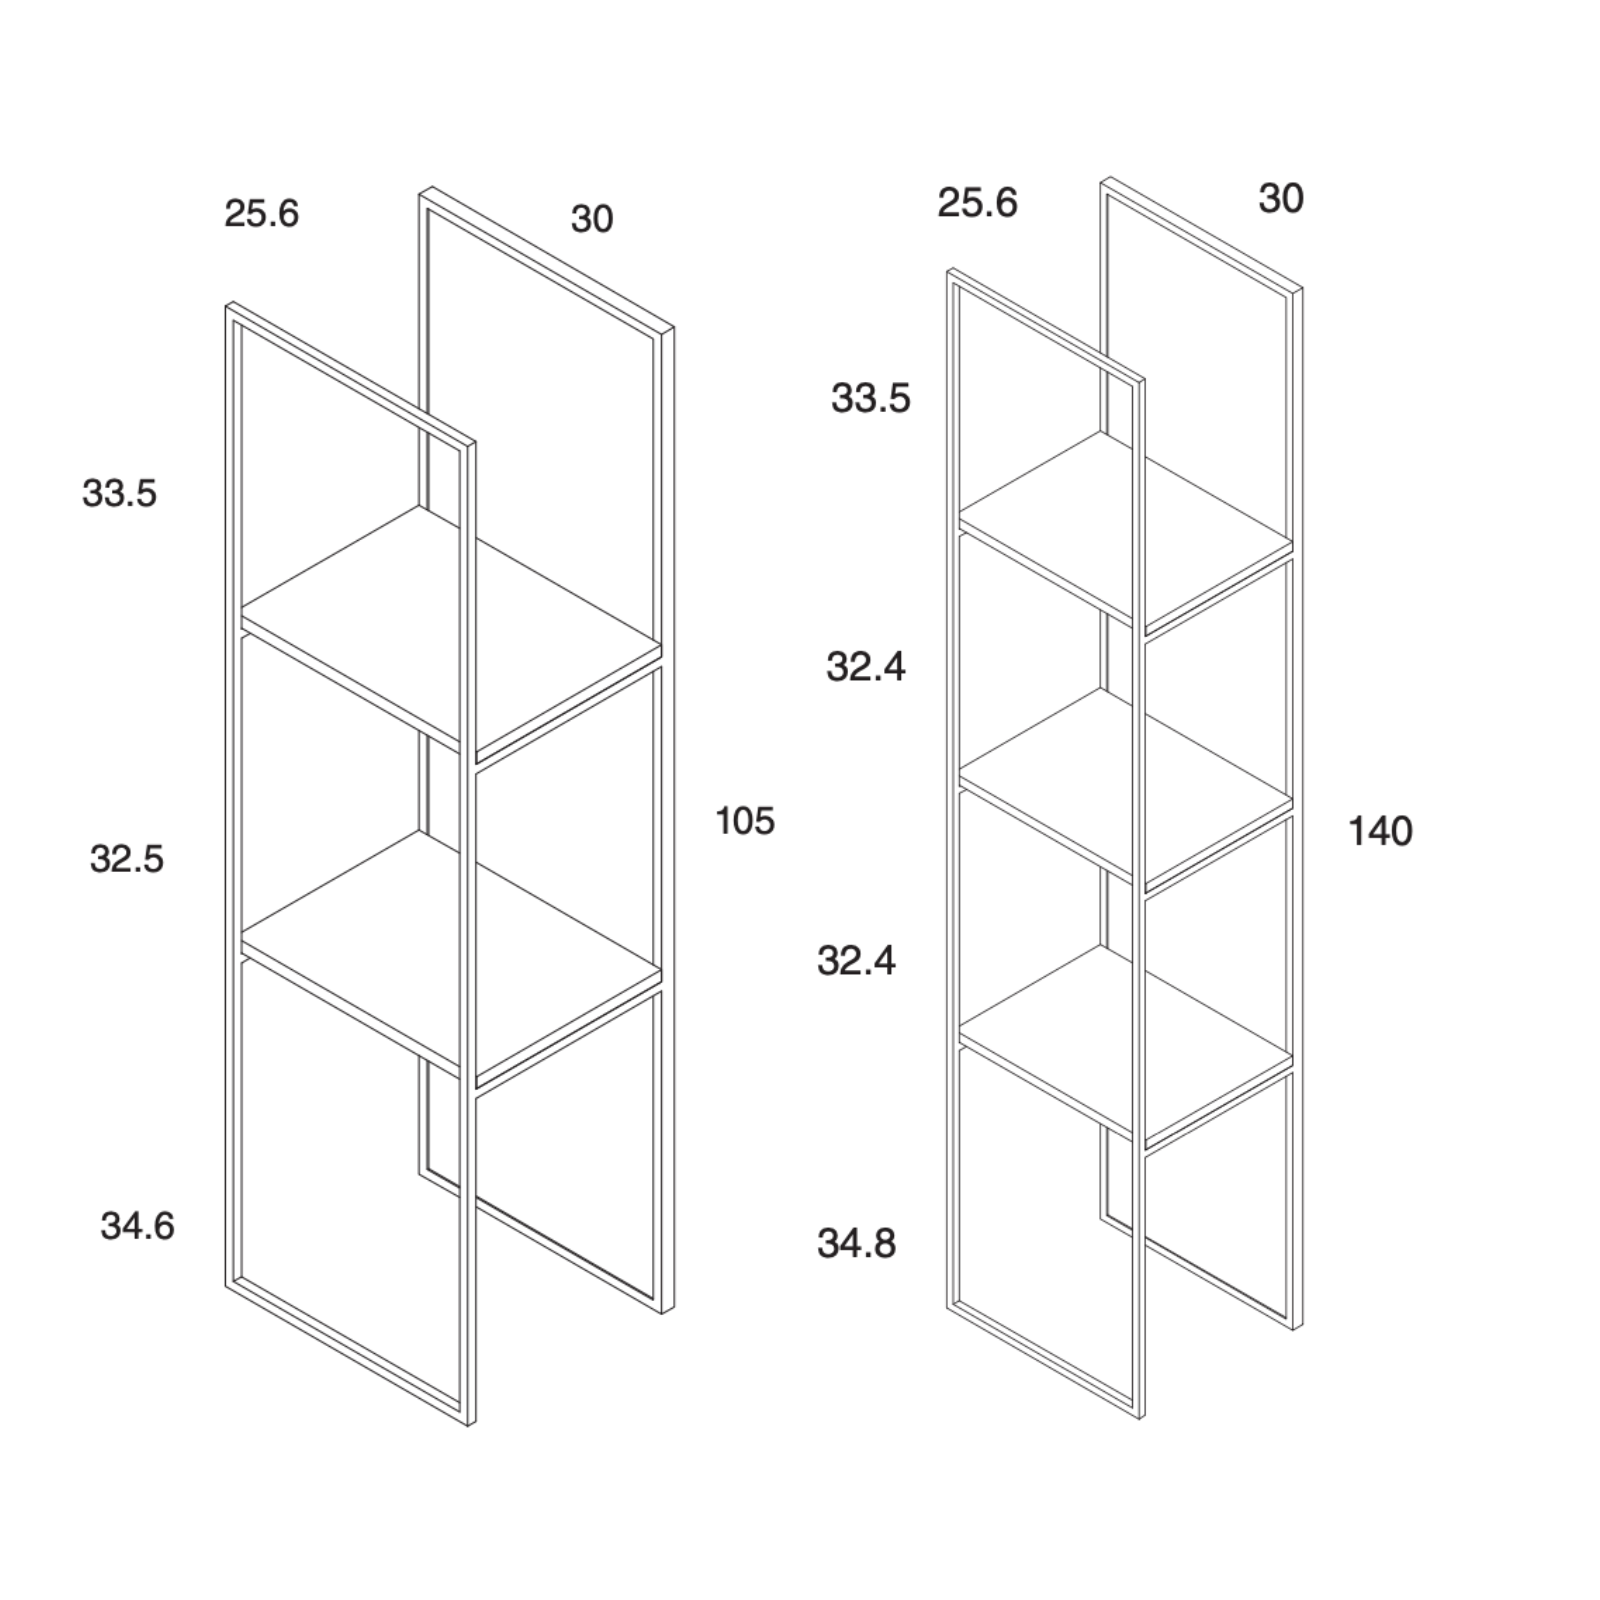 MOBENIA Pin Shelves Dimensions